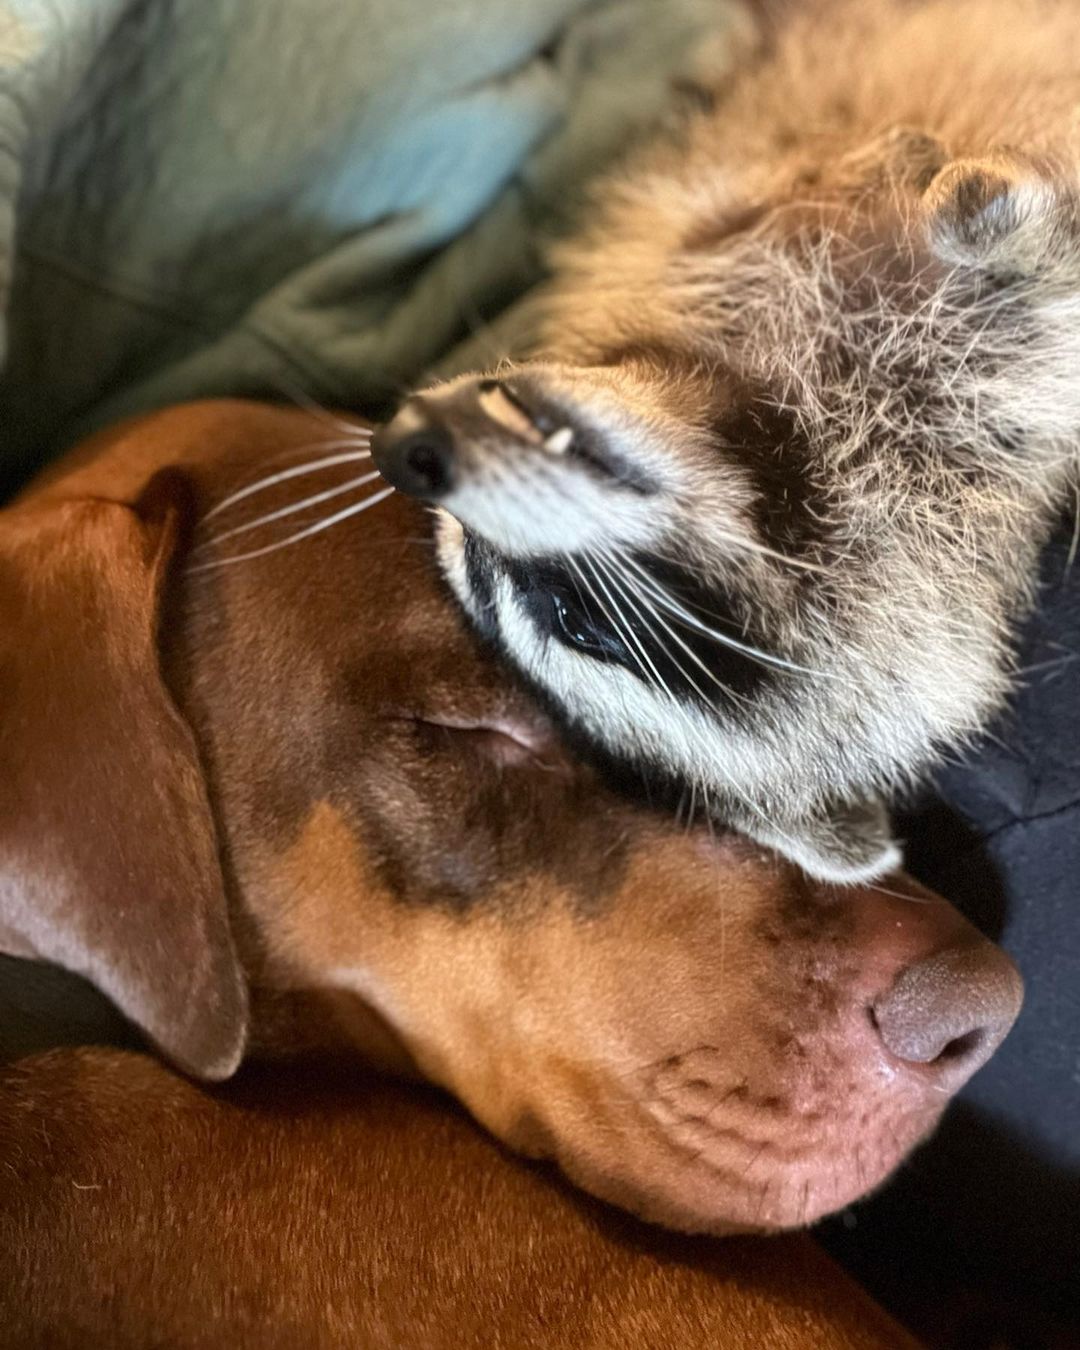 raccoon leaning its head on dog's head